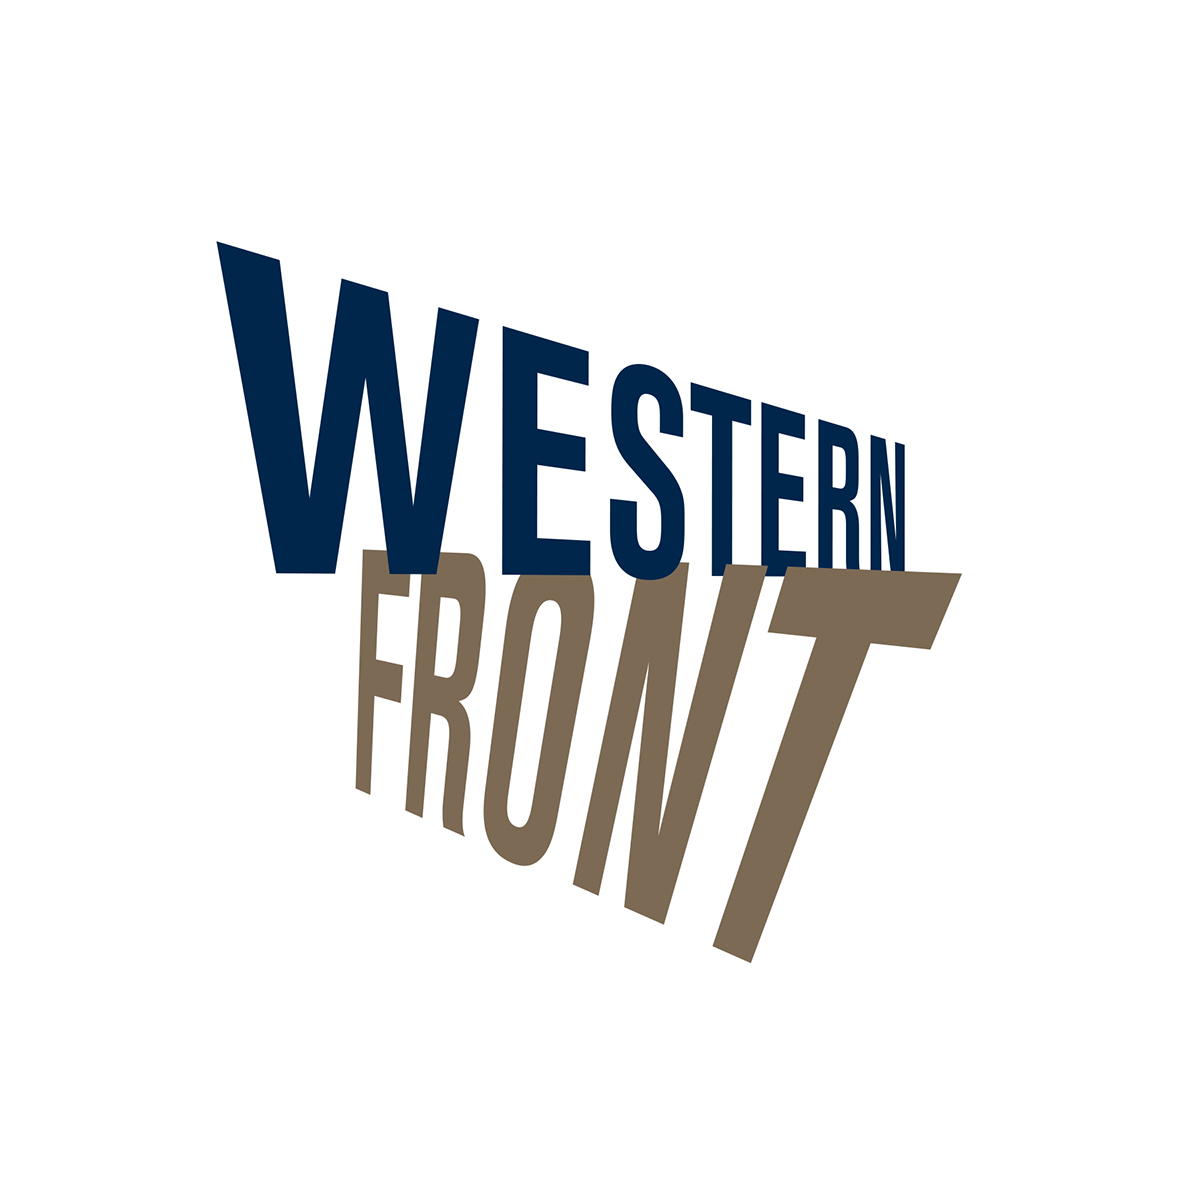 2008: Western Front (logo/identity)